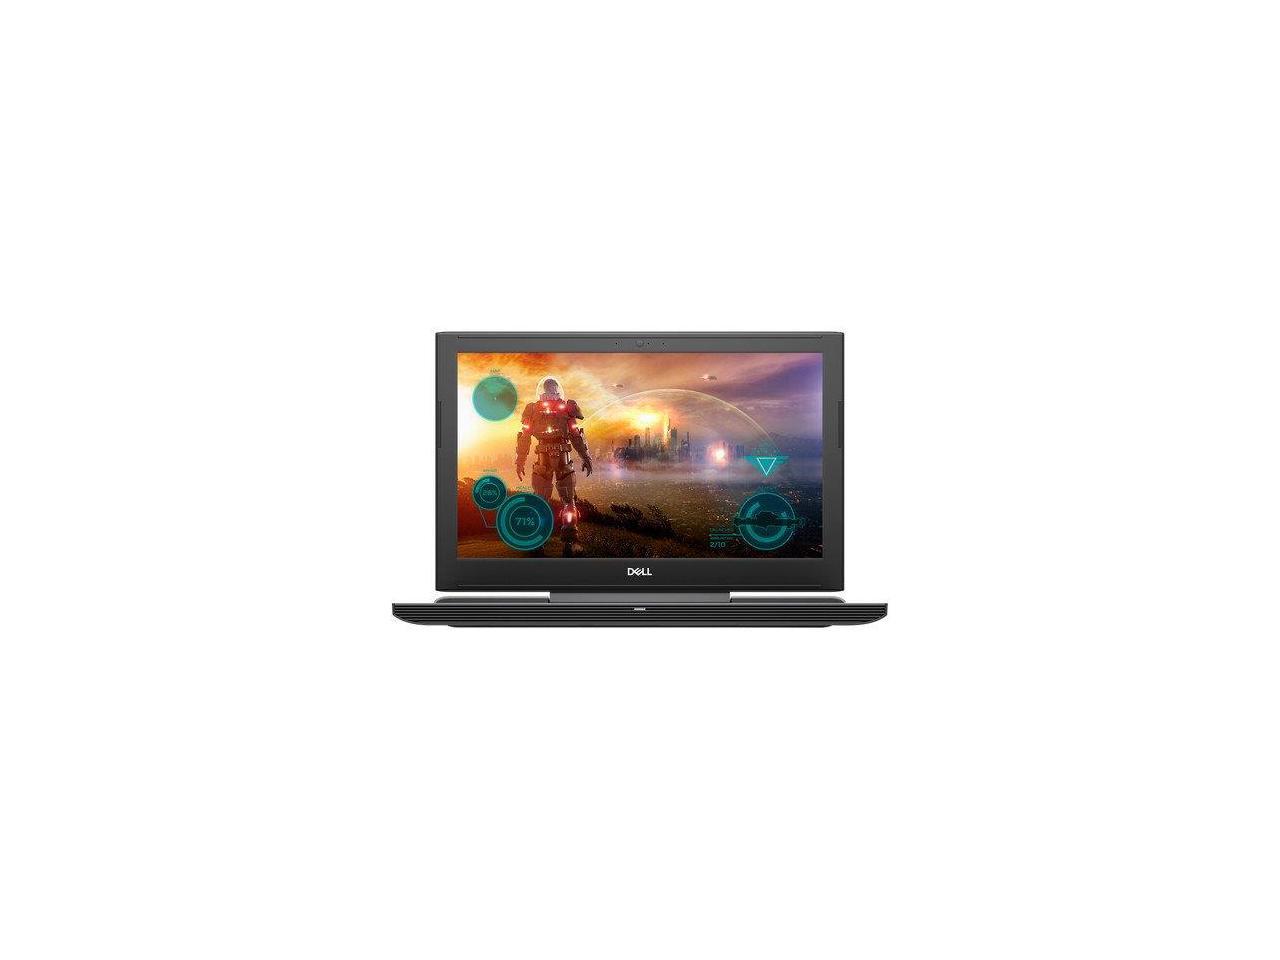 Dell Inspiron 7000 15.6" IPS FHD Gaming Laptop | VR Ready | Intel Quad Core i5-7300HQ | 16GB RAM 512GB SSD 1TB HDD | NVIDIA GeForce GTX 1060 6GB GDDR5 | Windows 10 Black